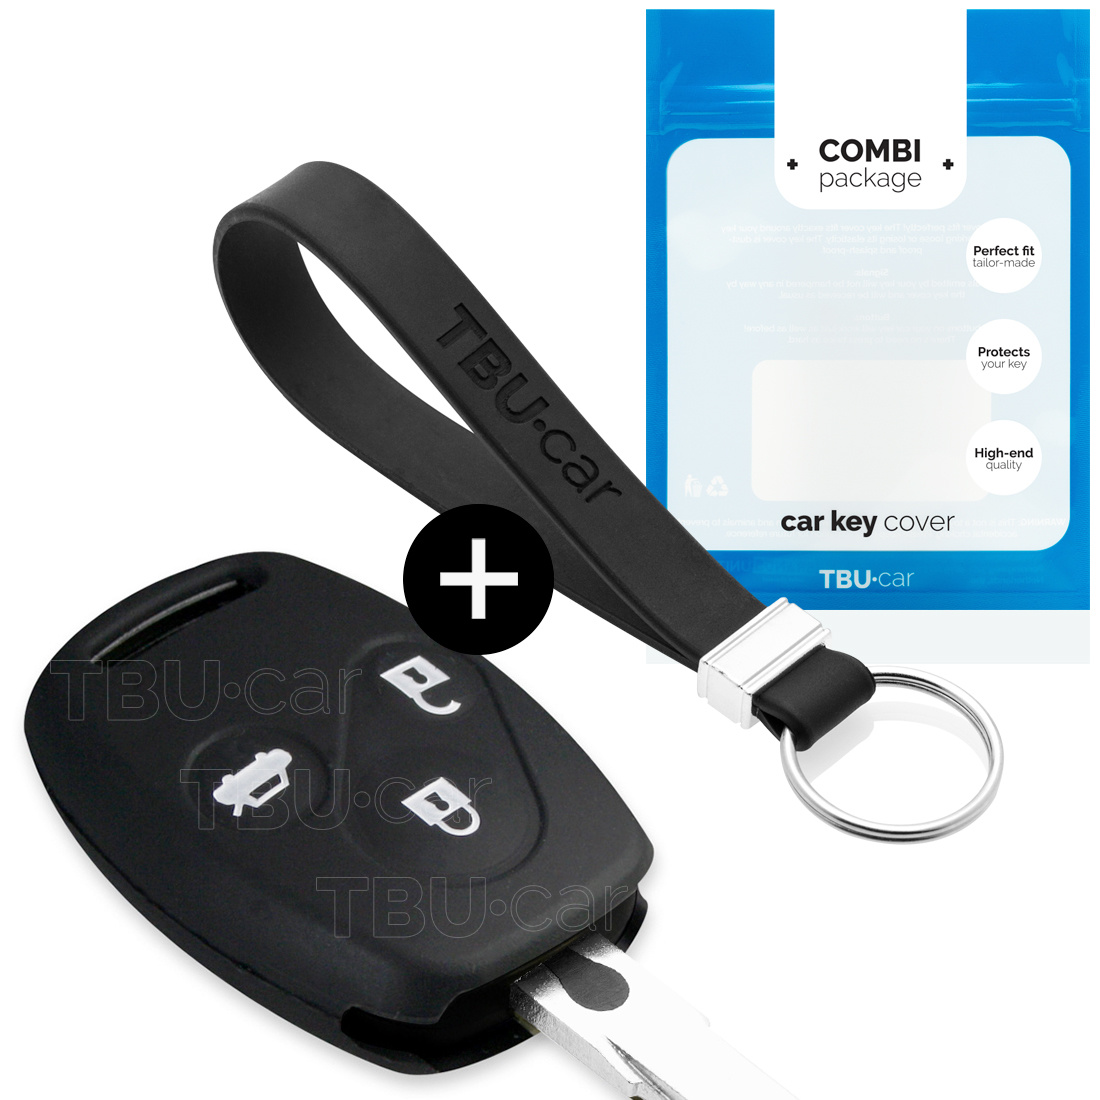 TBU car TBU car Car key cover compatible with Honda - Silicone Protective Remote Key Shell - FOB Case Cover - Black